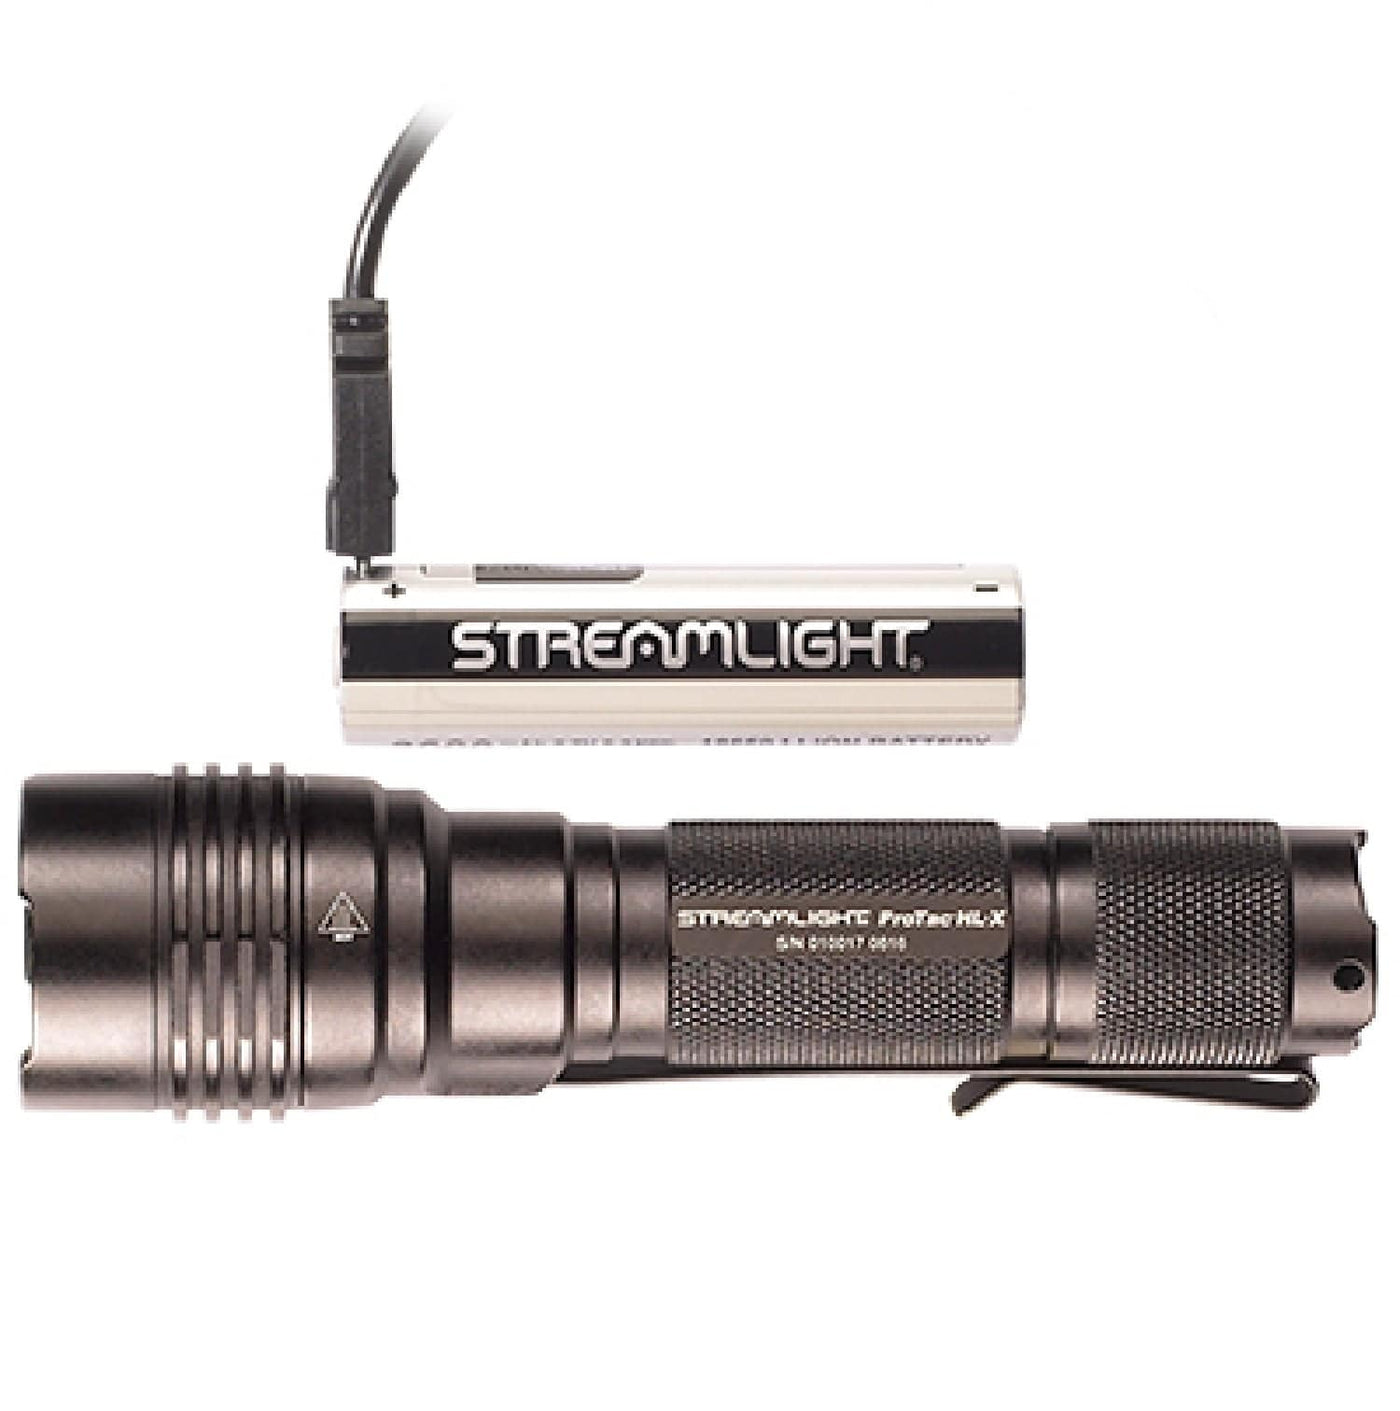 Streamlight Streamlight Pro Tac HL-X USB 1000 Lumens Lights